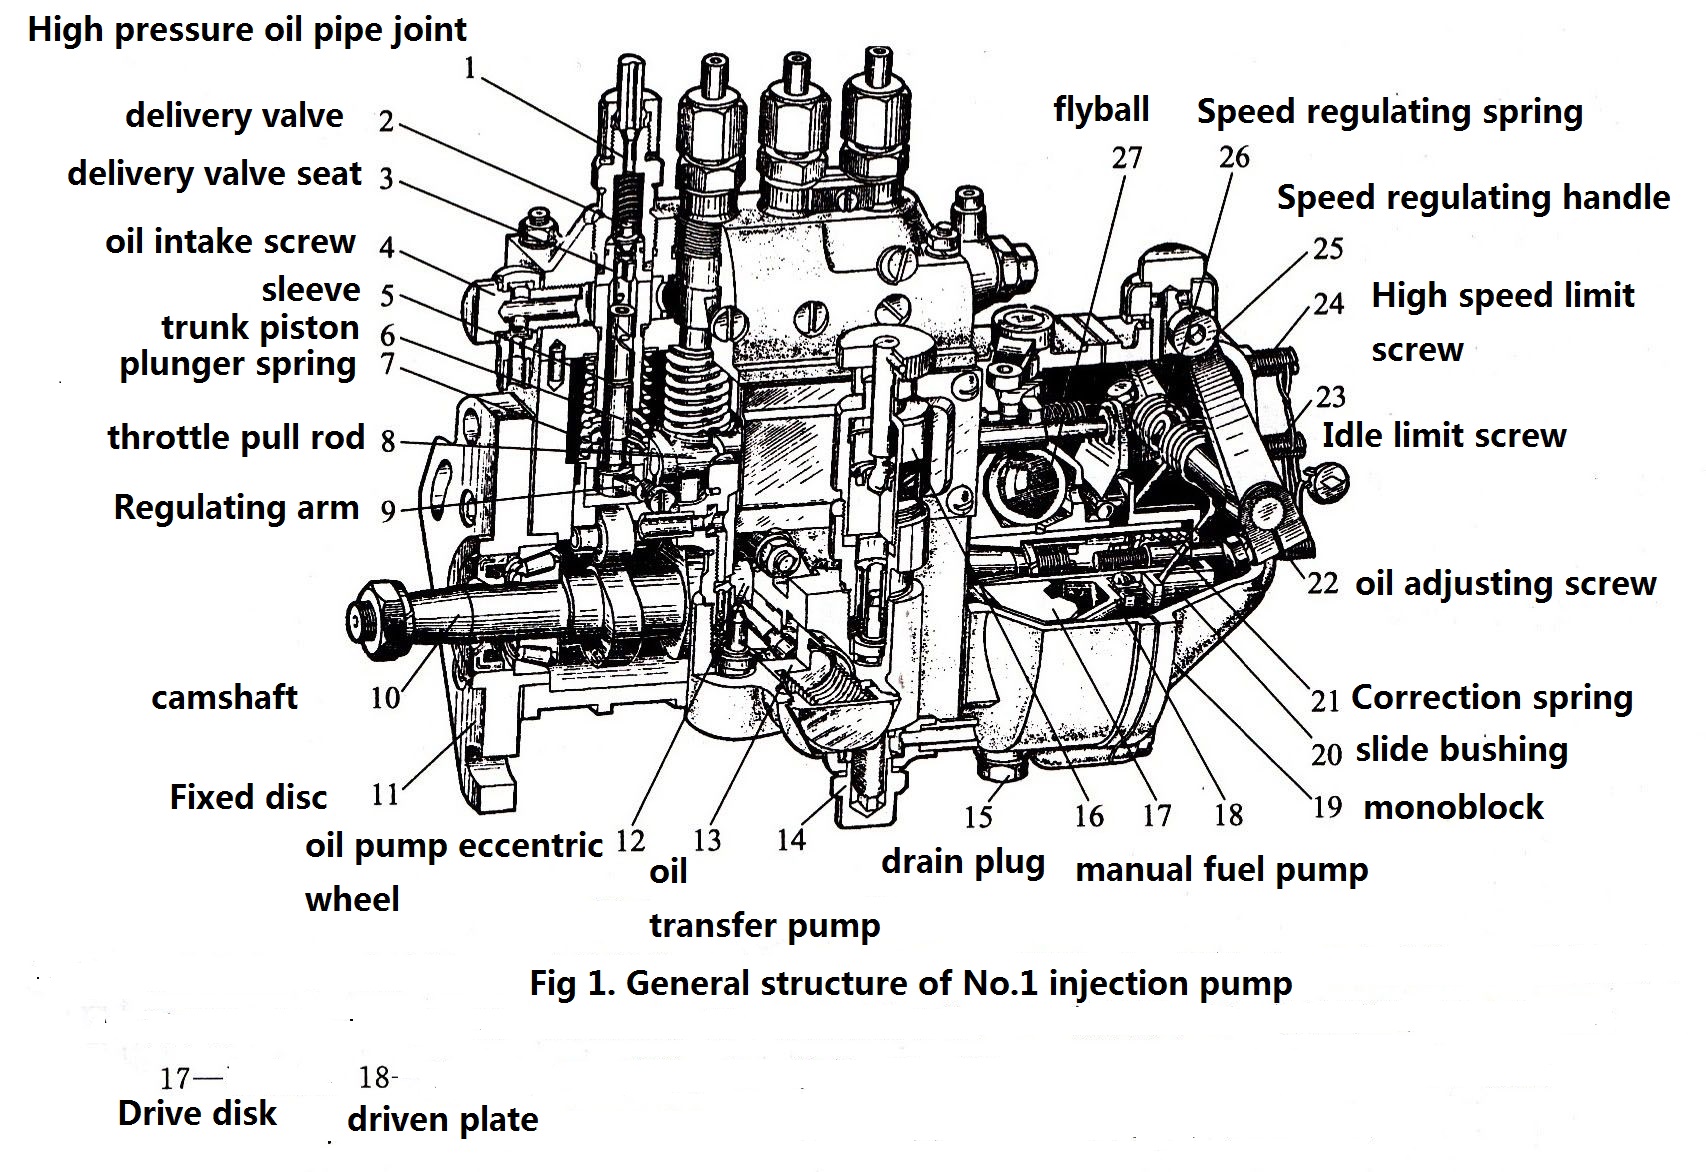 I号喷油泵总体构造图.jpg